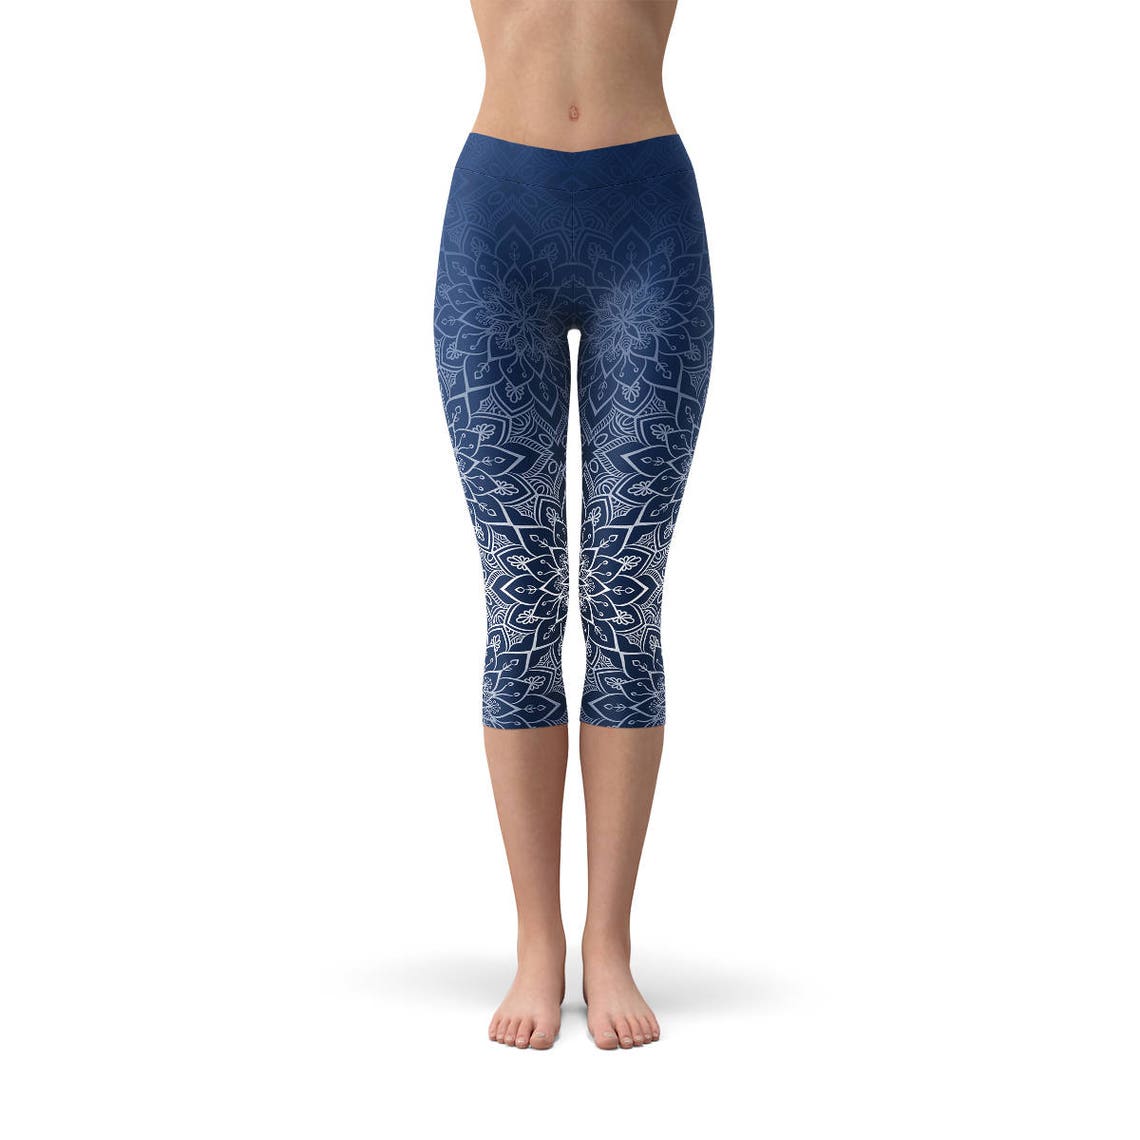 Lotus Mandala Capris for Women Mid-waist Yoga Capri Leggings - Etsy